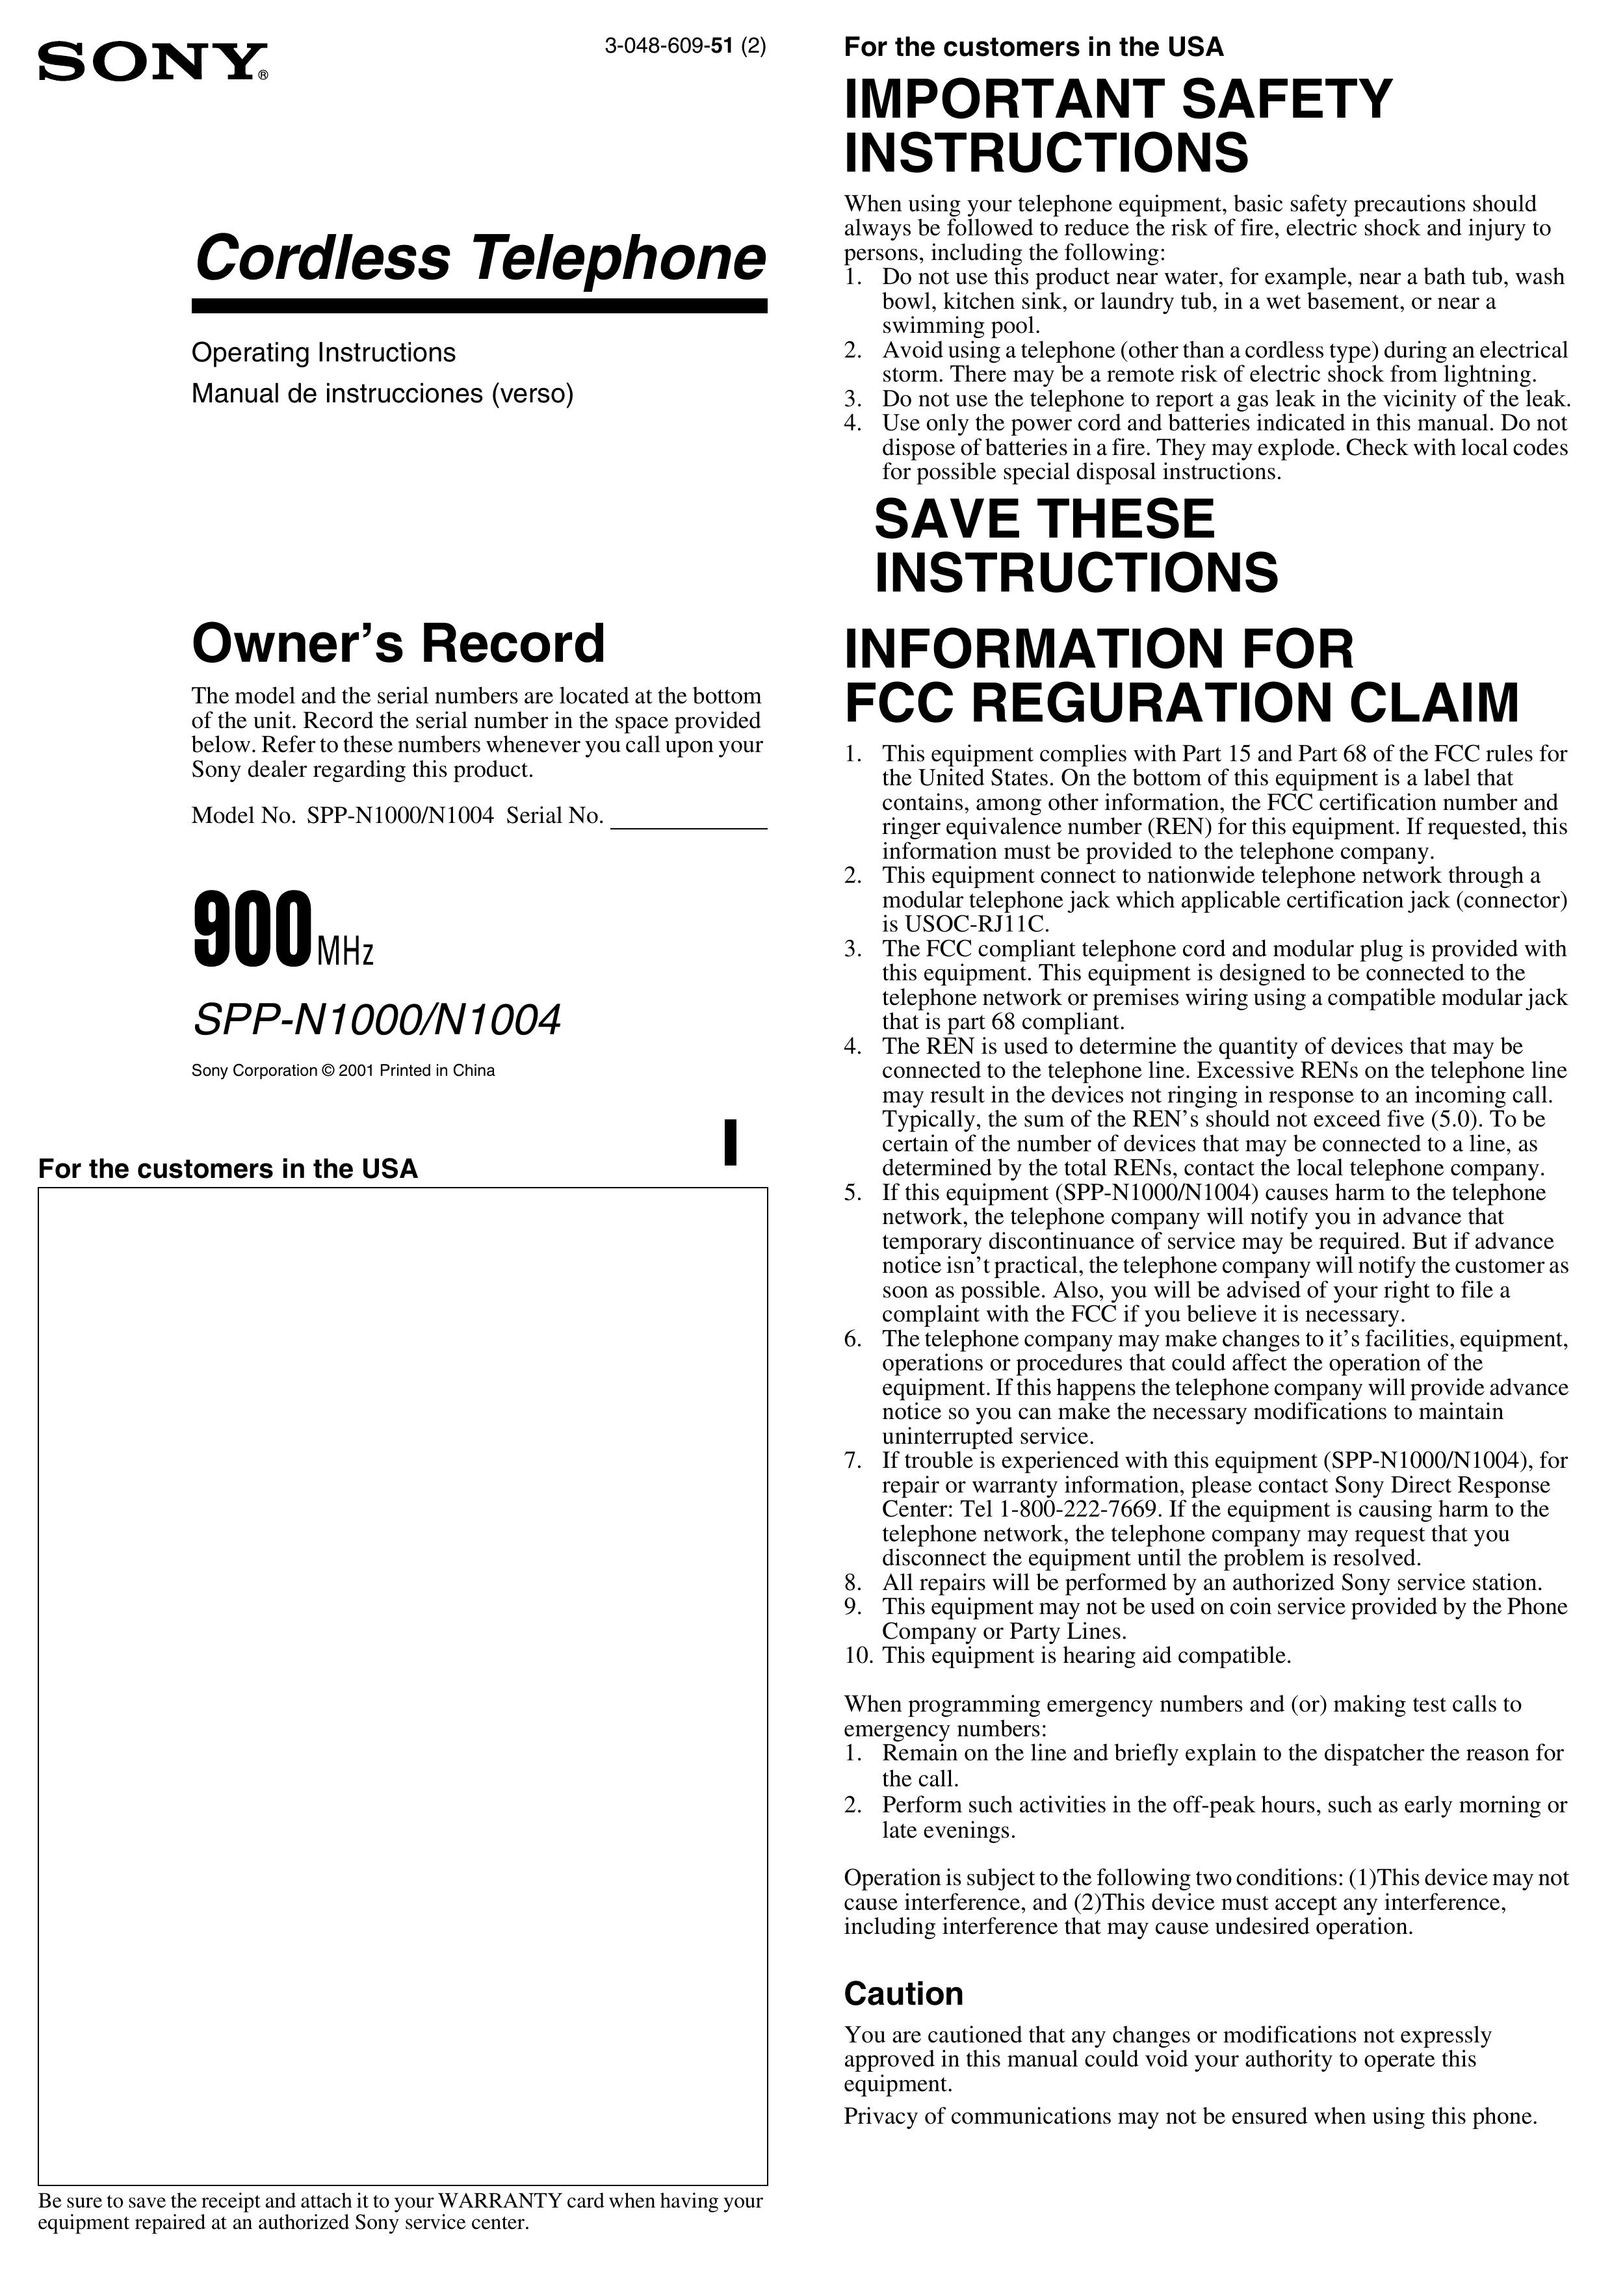 Sony SPP-N1004 Cordless Telephone User Manual